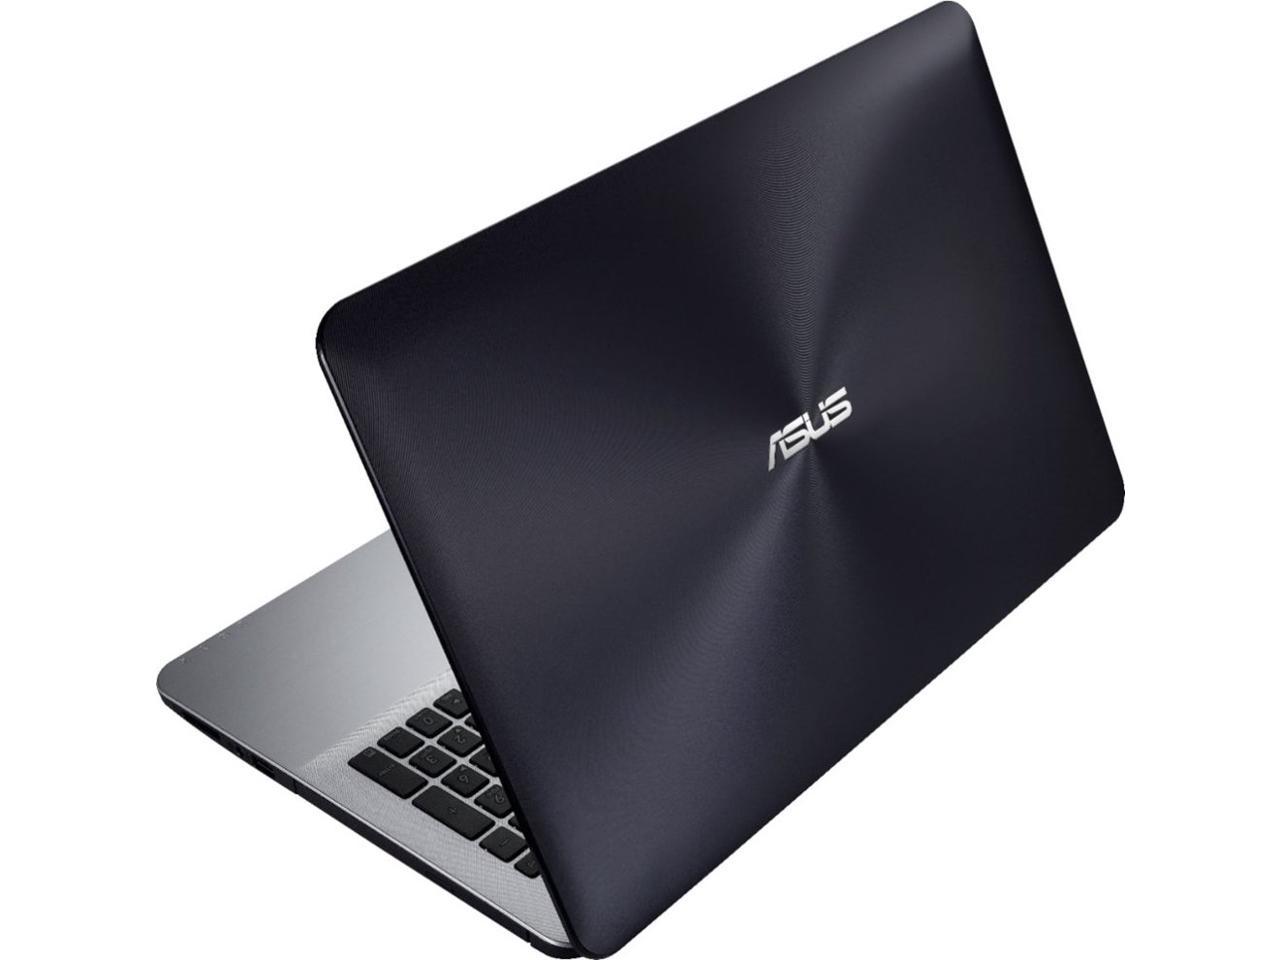 ASUS X555QA-CBA12A 15.6" Laptop - AMD A12-Series 8GB Memory AMD Radeon R7 - 128GB Solid State Drive - Matte Silver IMR, Black Notebook Computer - Newegg.com